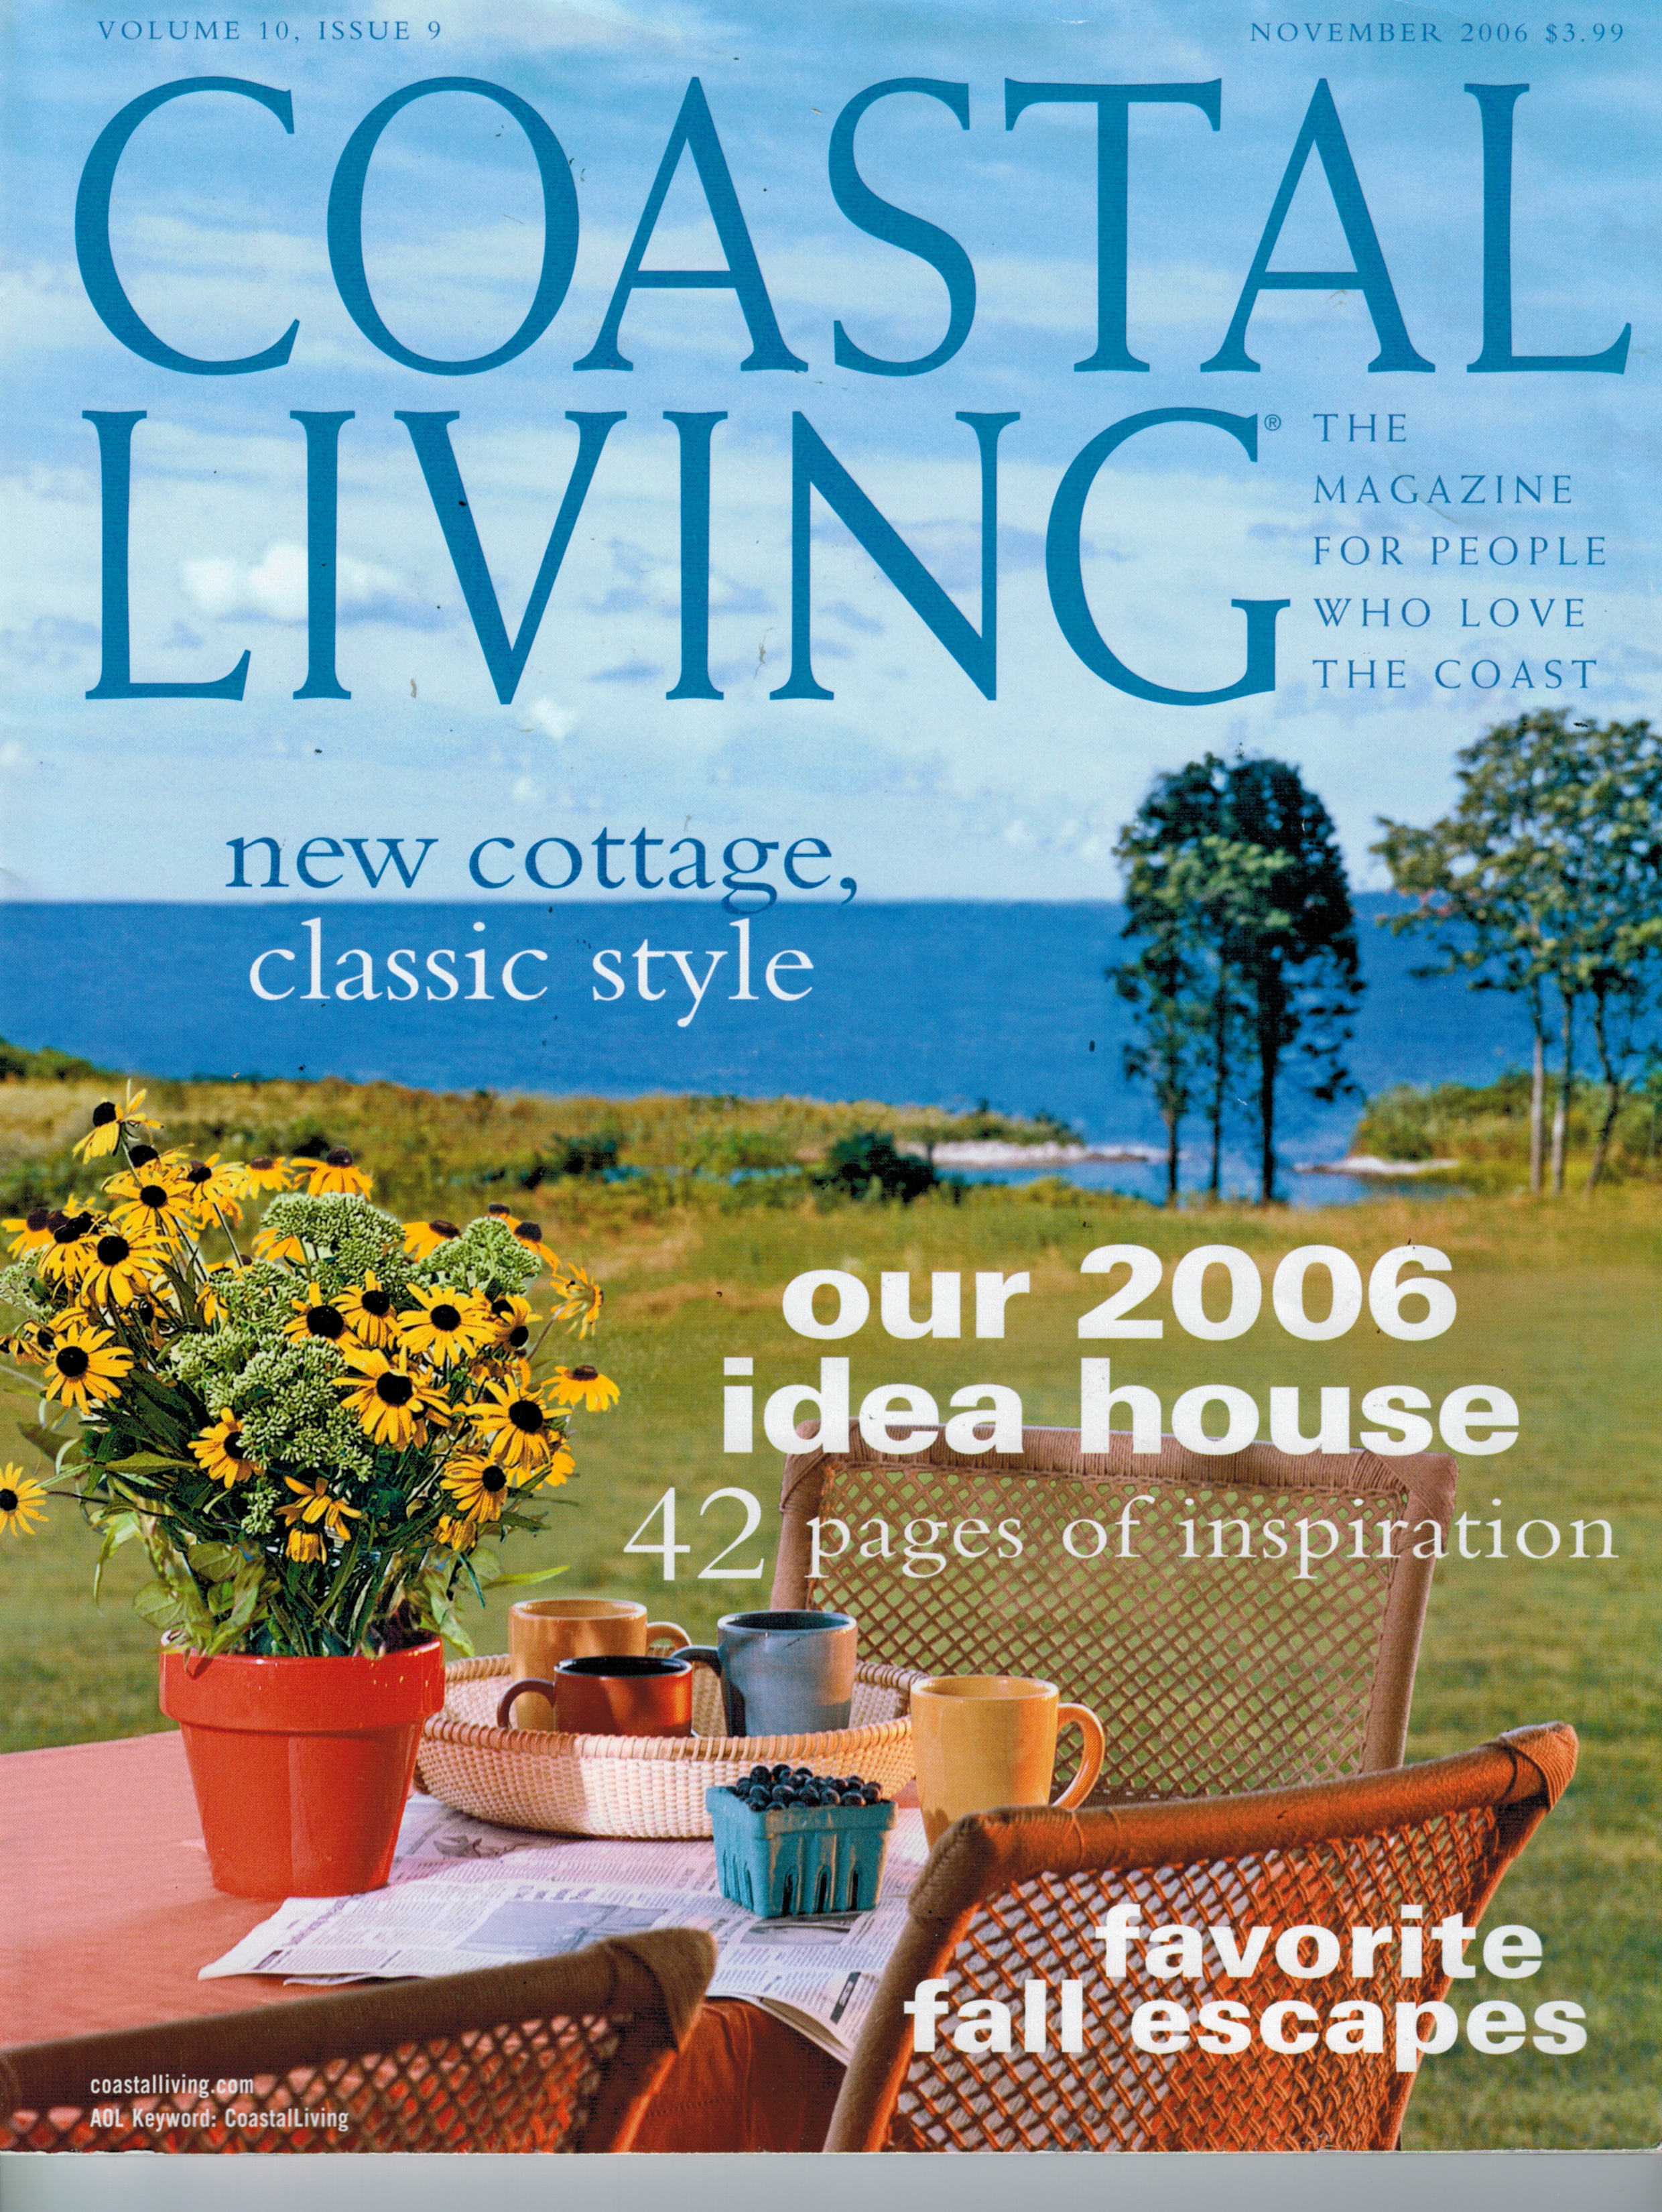 Coastal living cover.jpeg